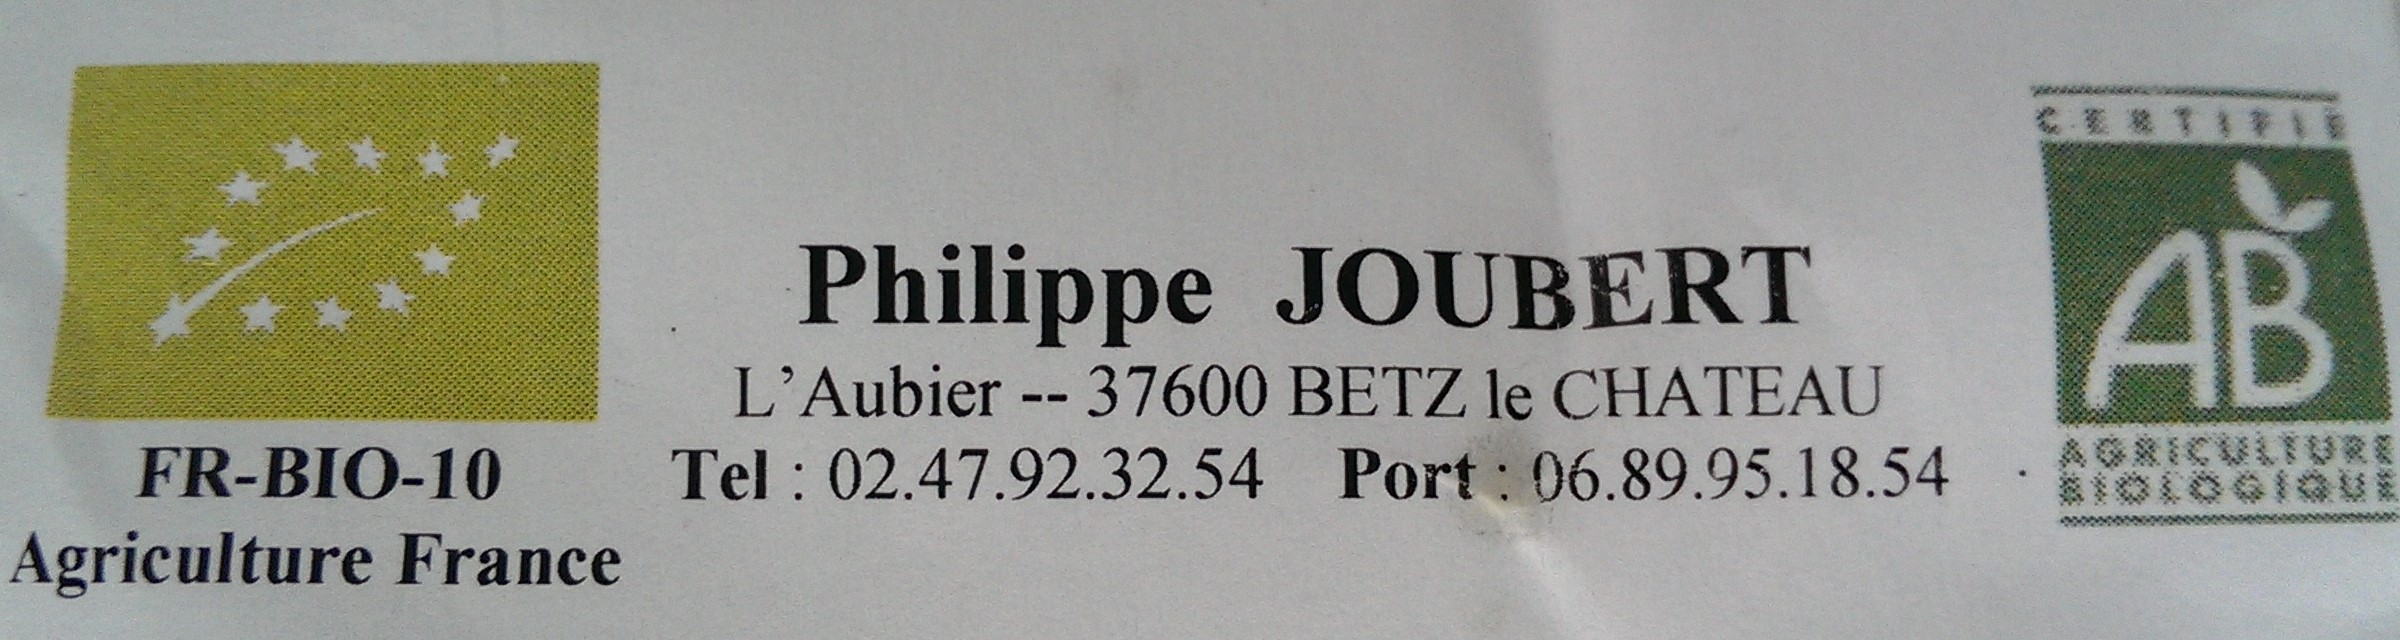 Joubert Philippe